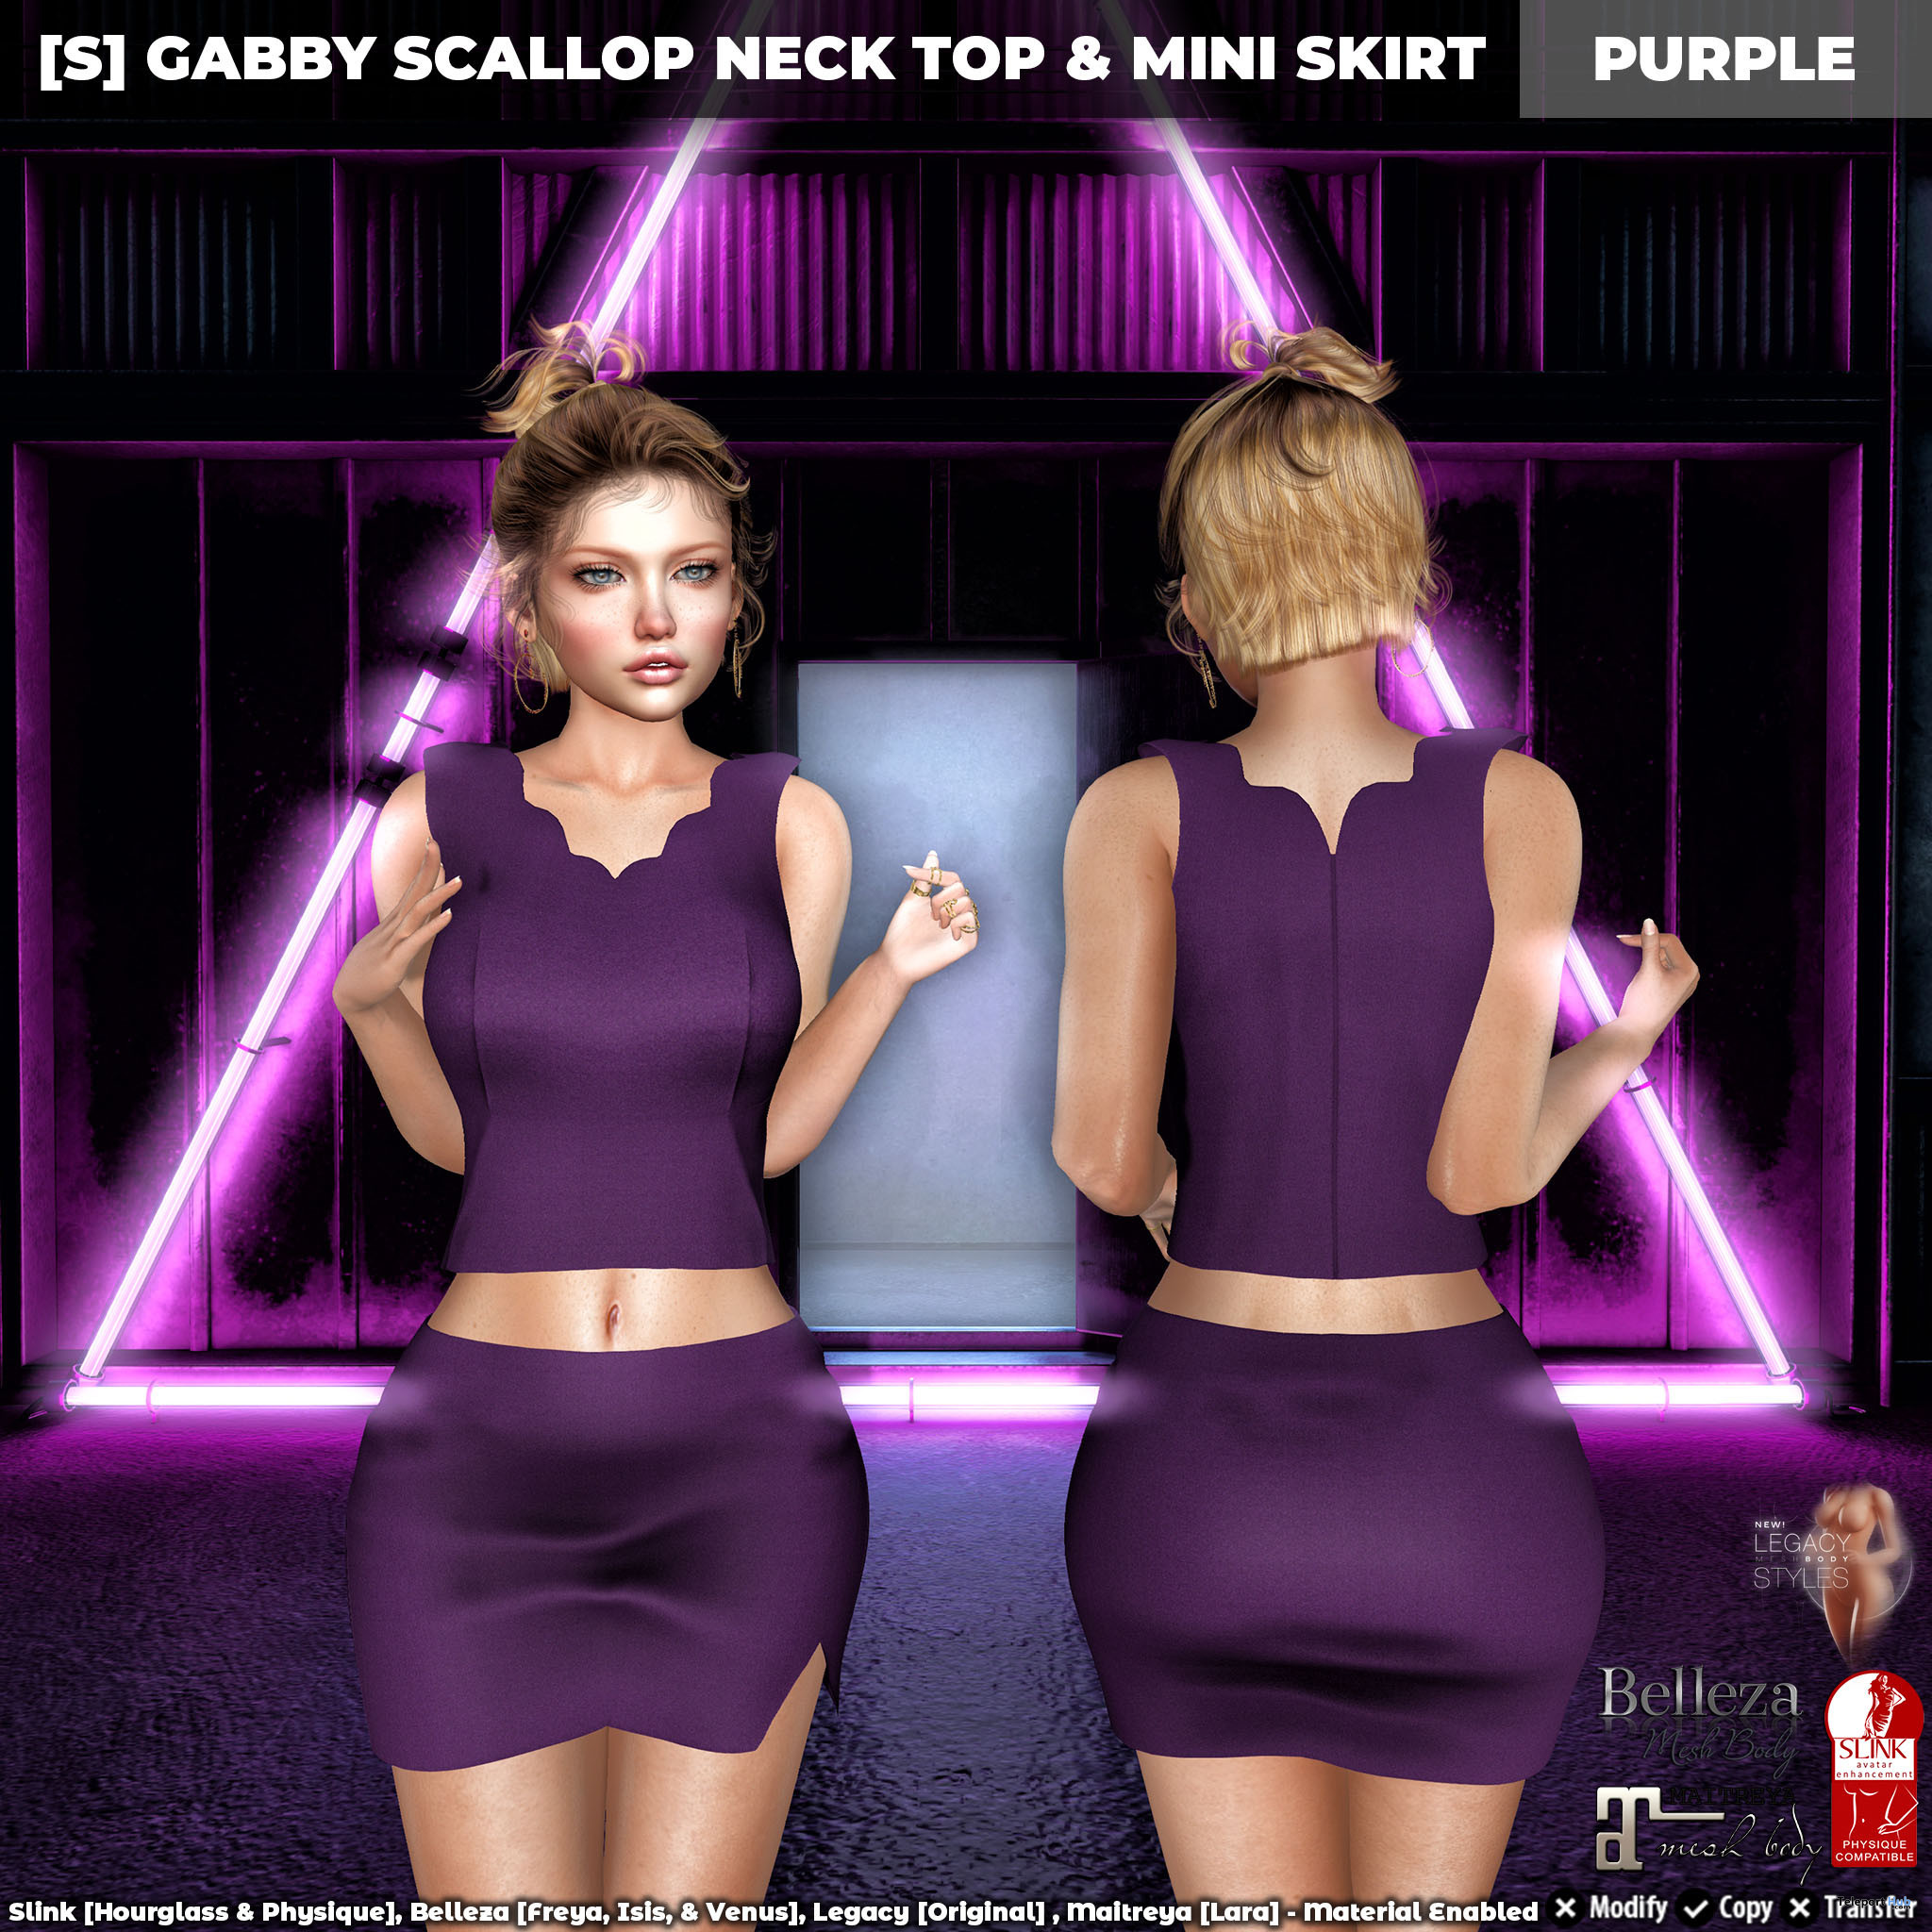 New Release: [S] Gabby Scallop Neck Top & Mini Skirt by [satus Inc] - Teleport Hub - teleporthub.com